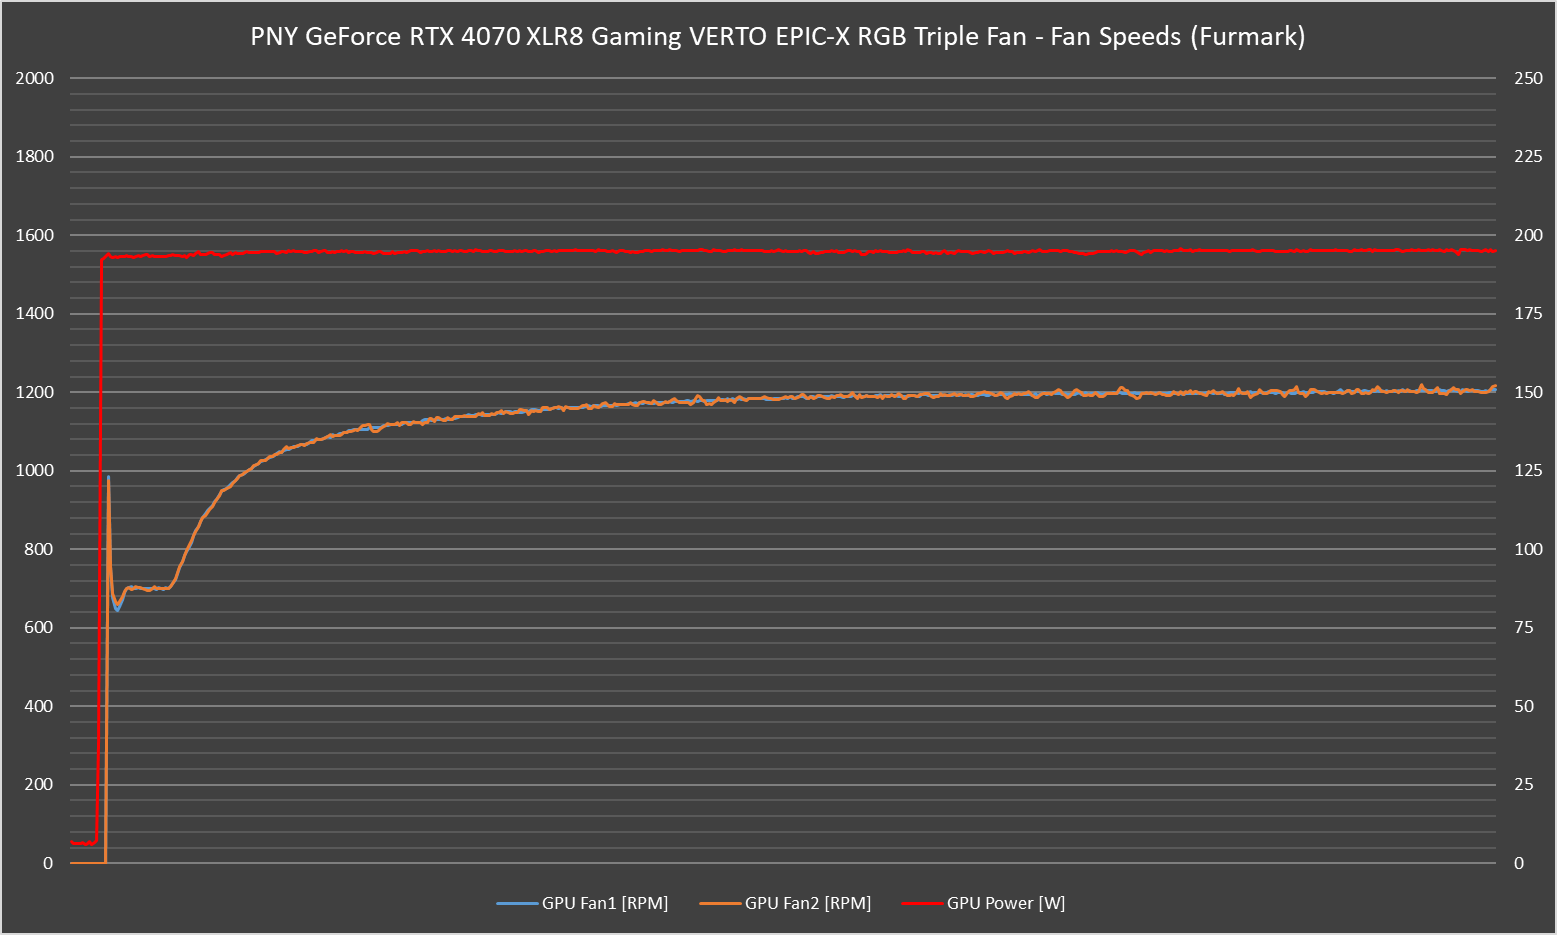 PNY GeForce RTX 4070 XLR8 Gaming VERTO EPIC-X RGB Triple Fan Review - Sticker Shock 39